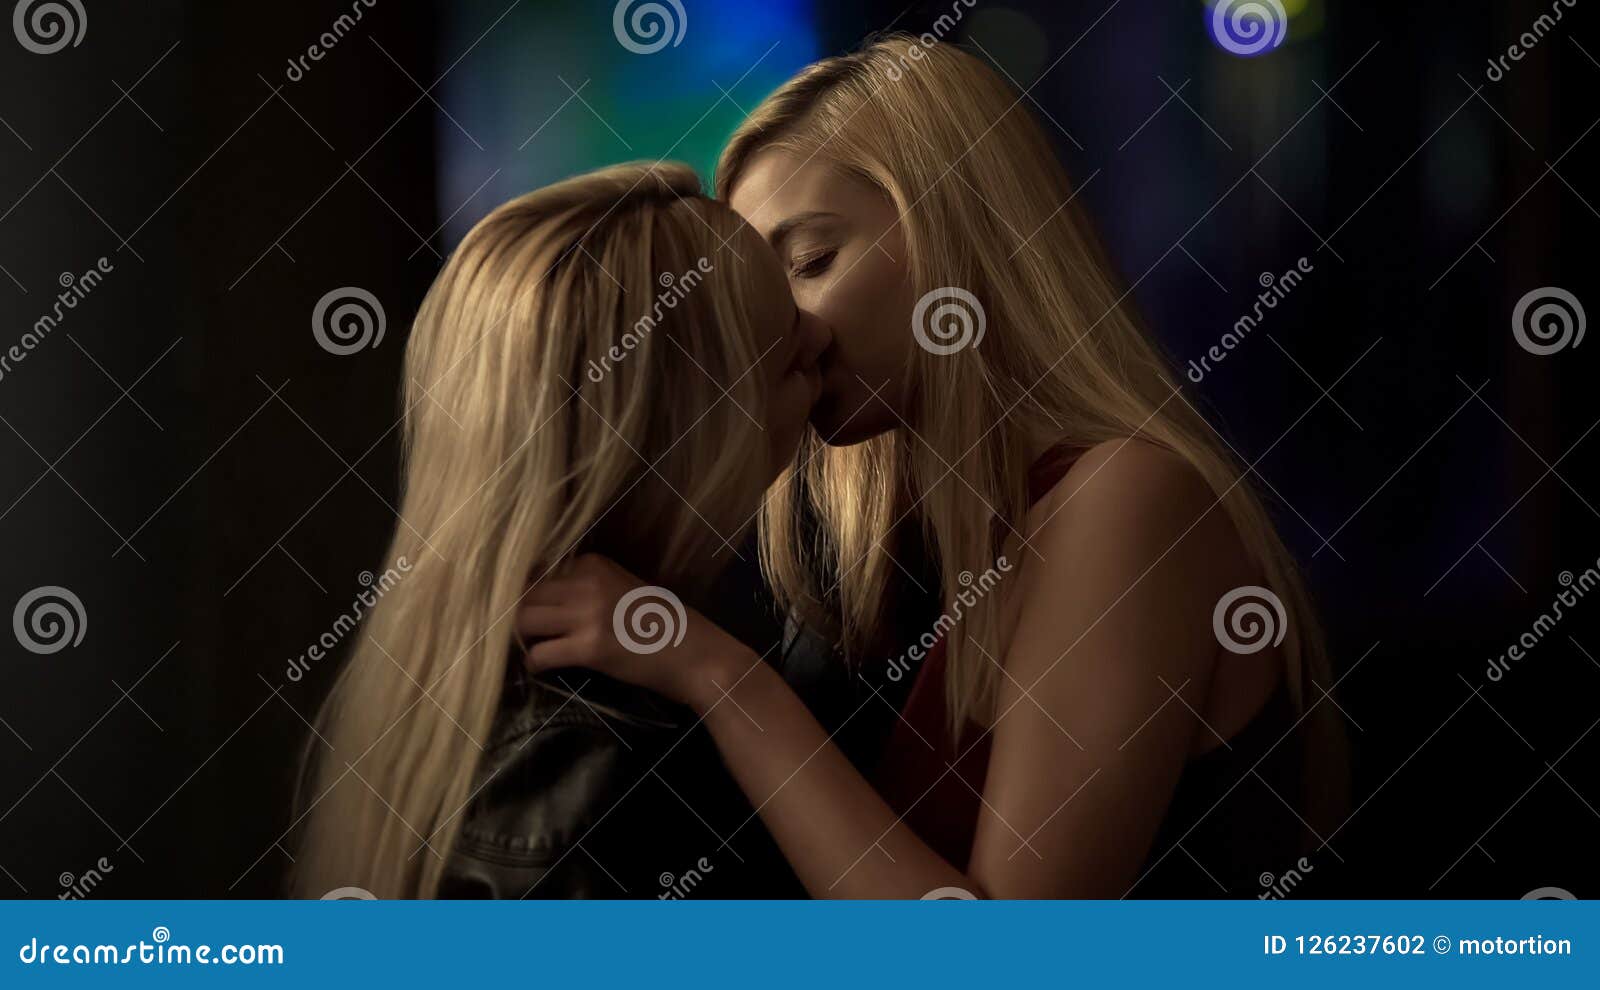 lesbians passionately kissing